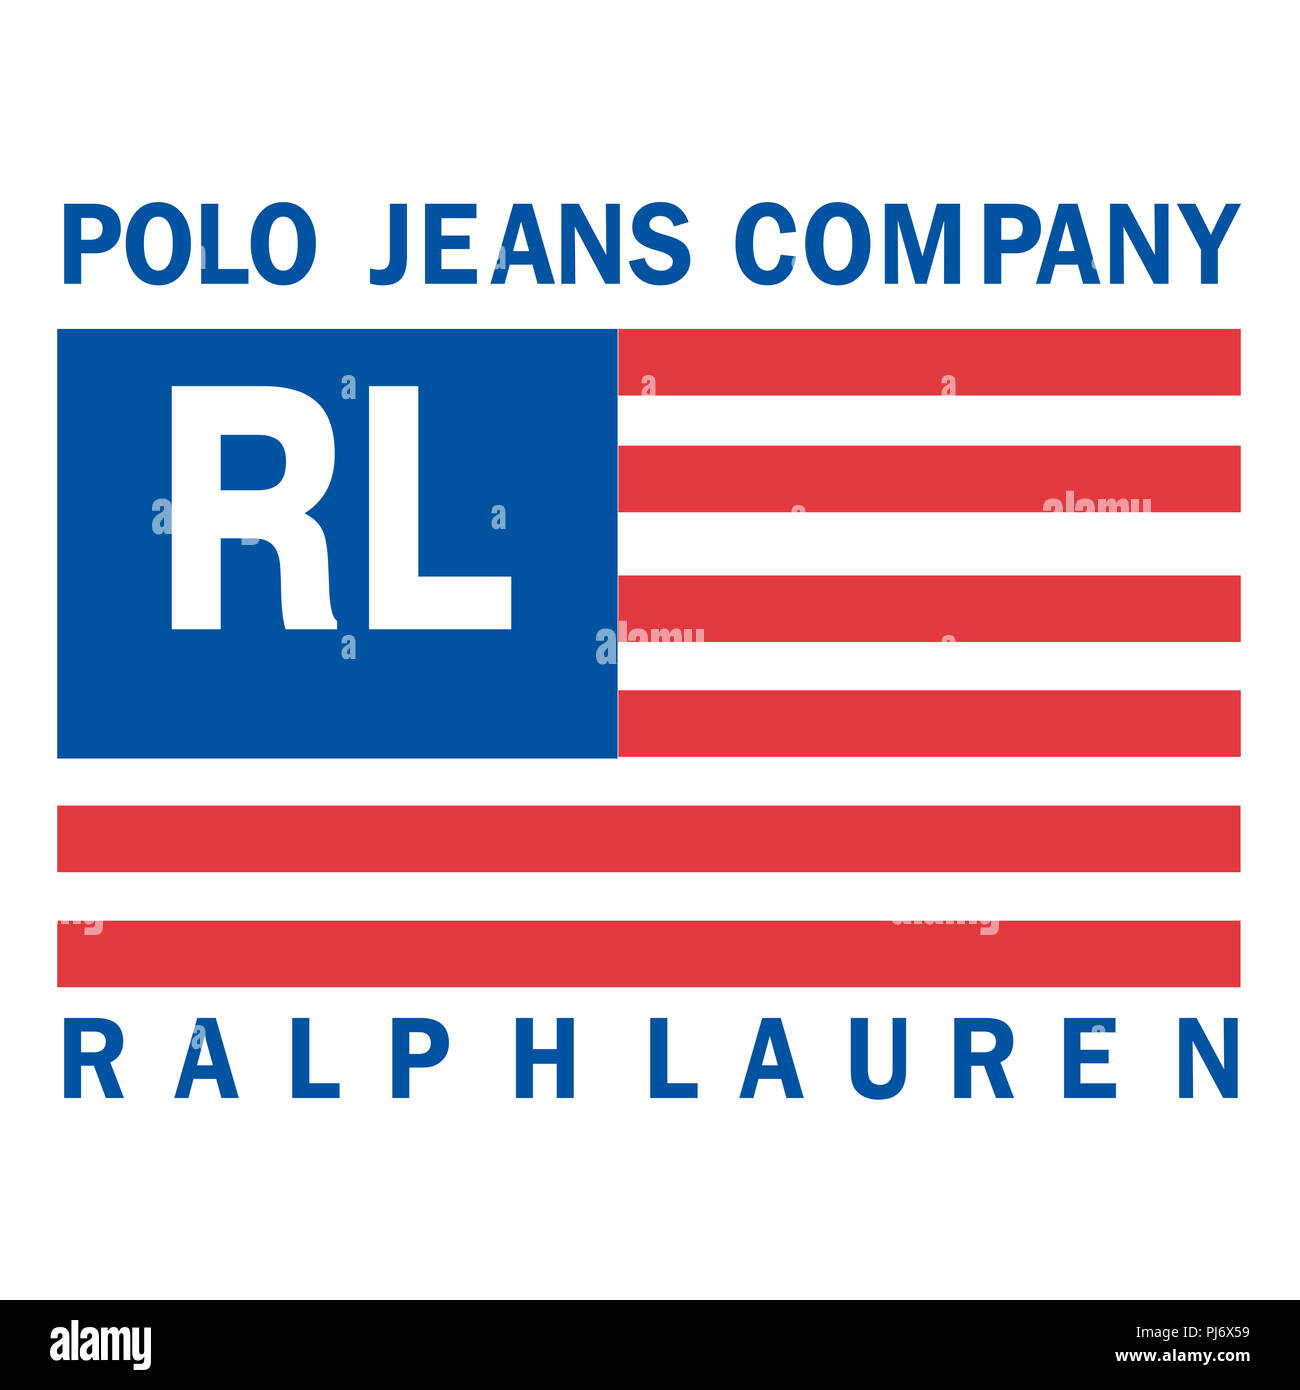 Ralph lauren logo hi-res stock photography and images - Alamy